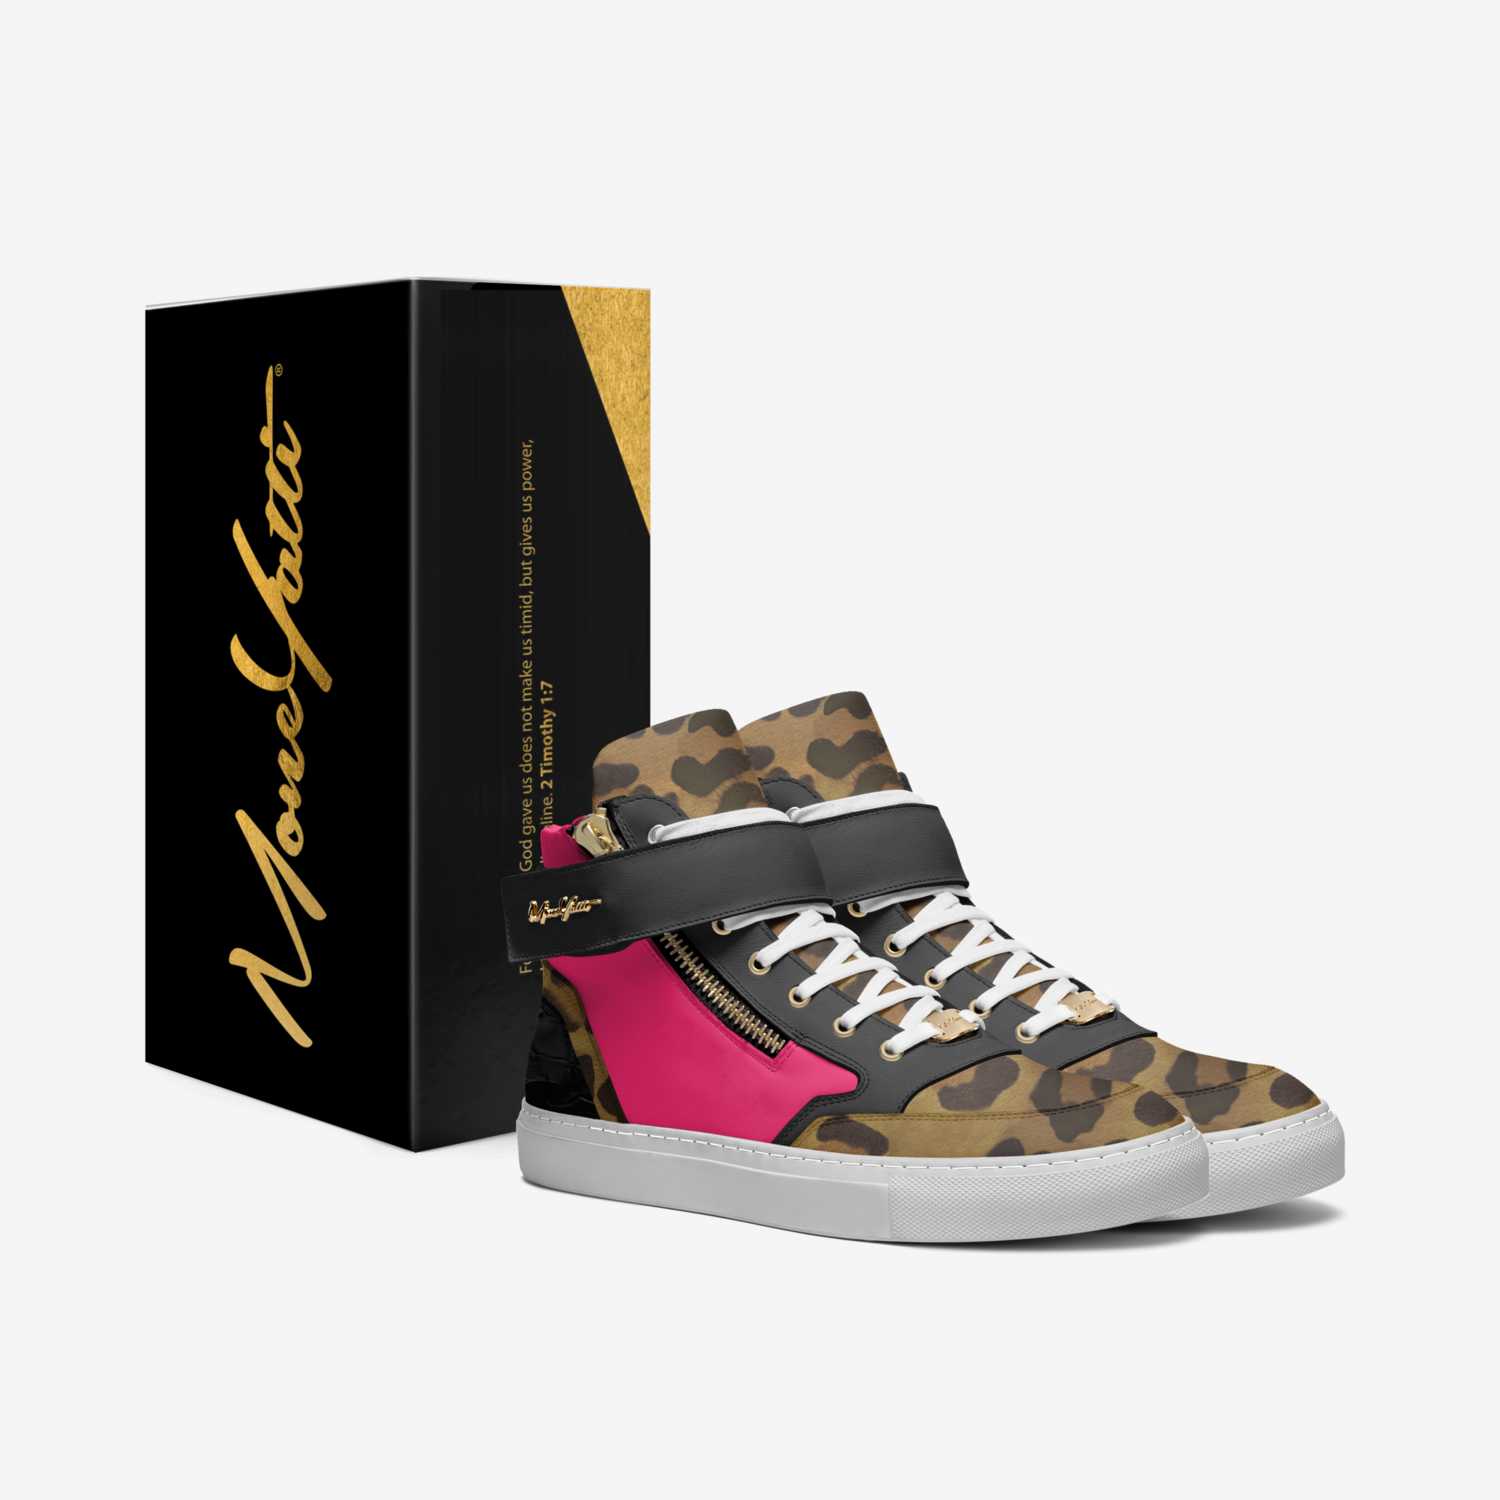 MONEYATTI CLS3W custom made in Italy shoes by Moneyatti Brand | Box view